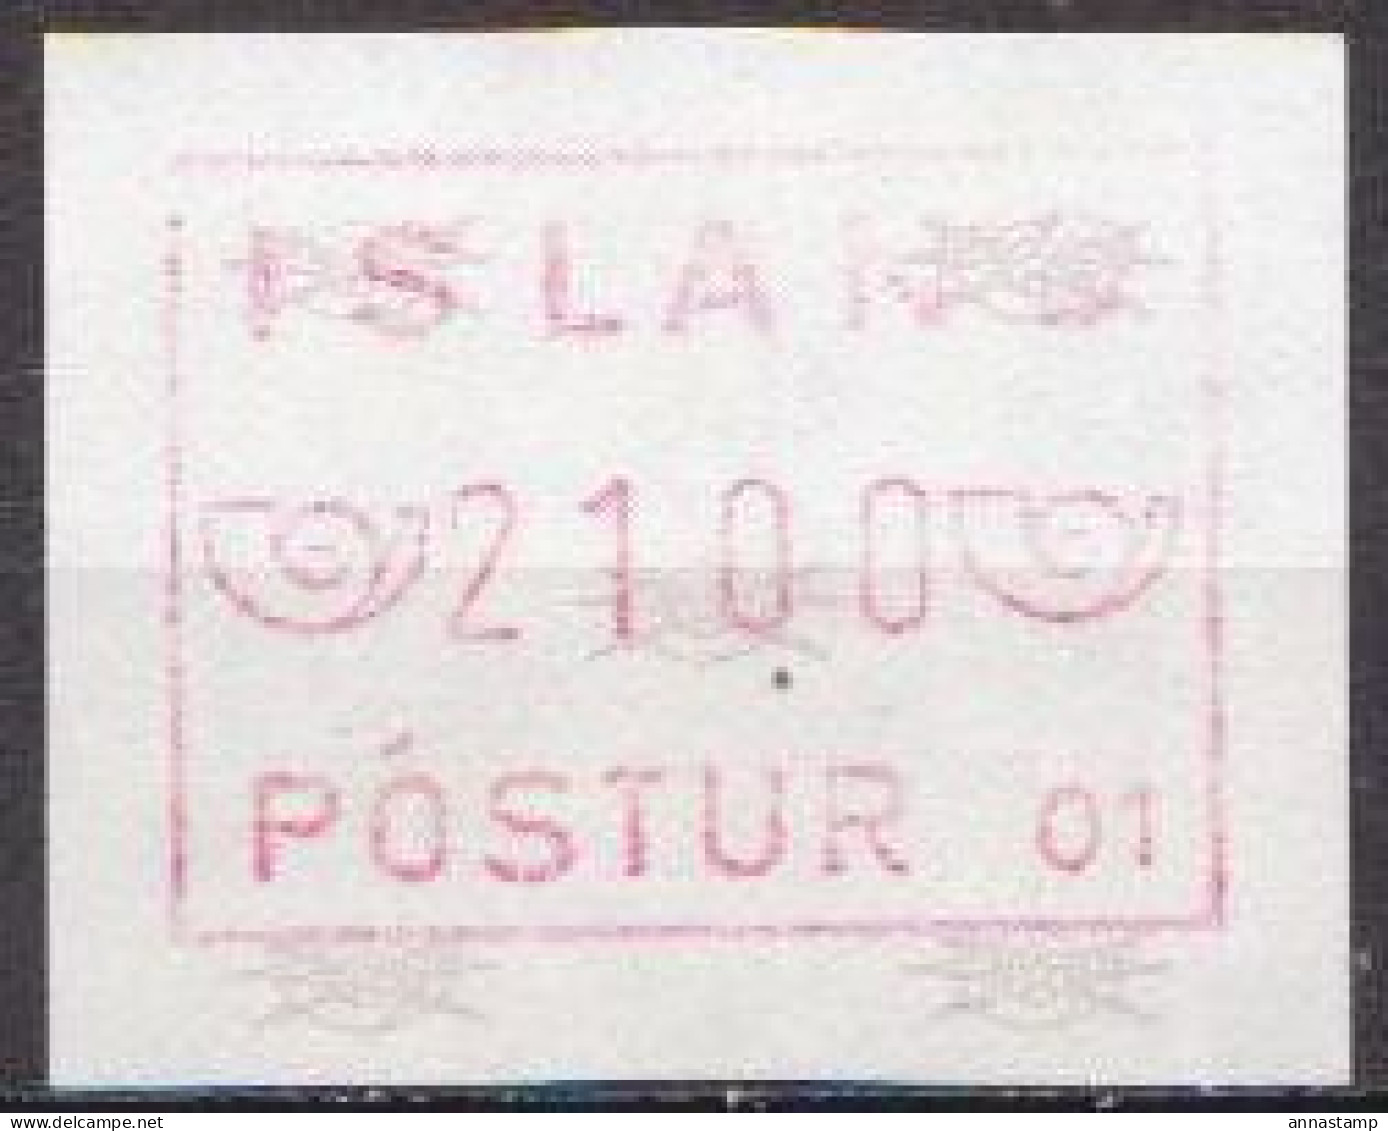 Iceland MNH Stamp - Automatenmarken (Frama)